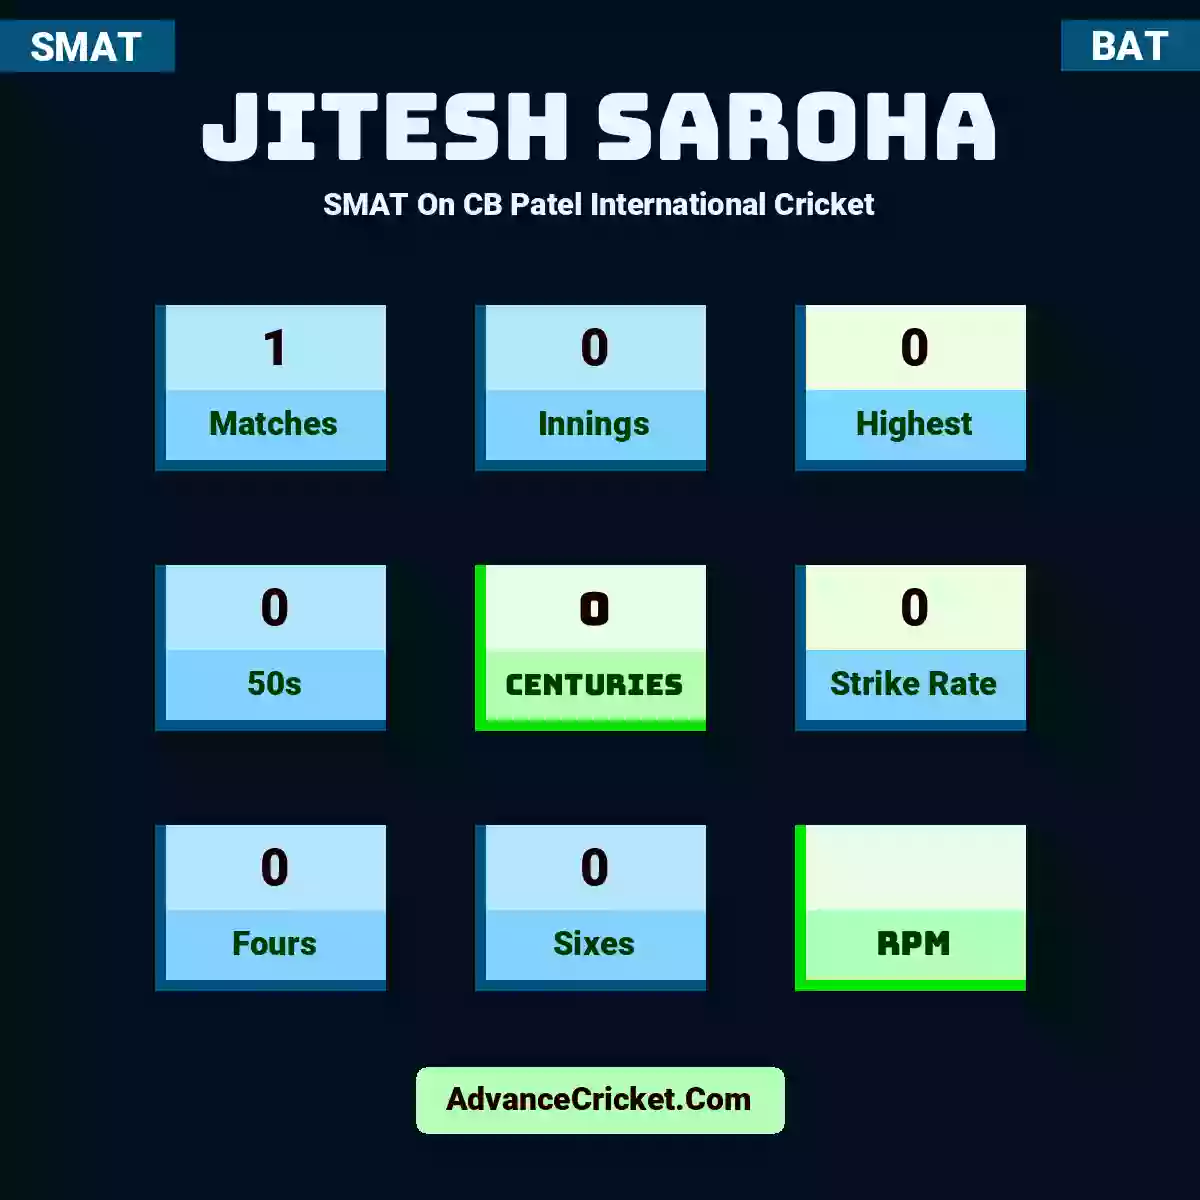 Jitesh Saroha SMAT  On CB Patel International Cricket, Jitesh Saroha played 1 matches, scored 0 runs as highest, 0 half-centuries, and 0 centuries, with a strike rate of 0. J.Saroha hit 0 fours and 0 sixes.